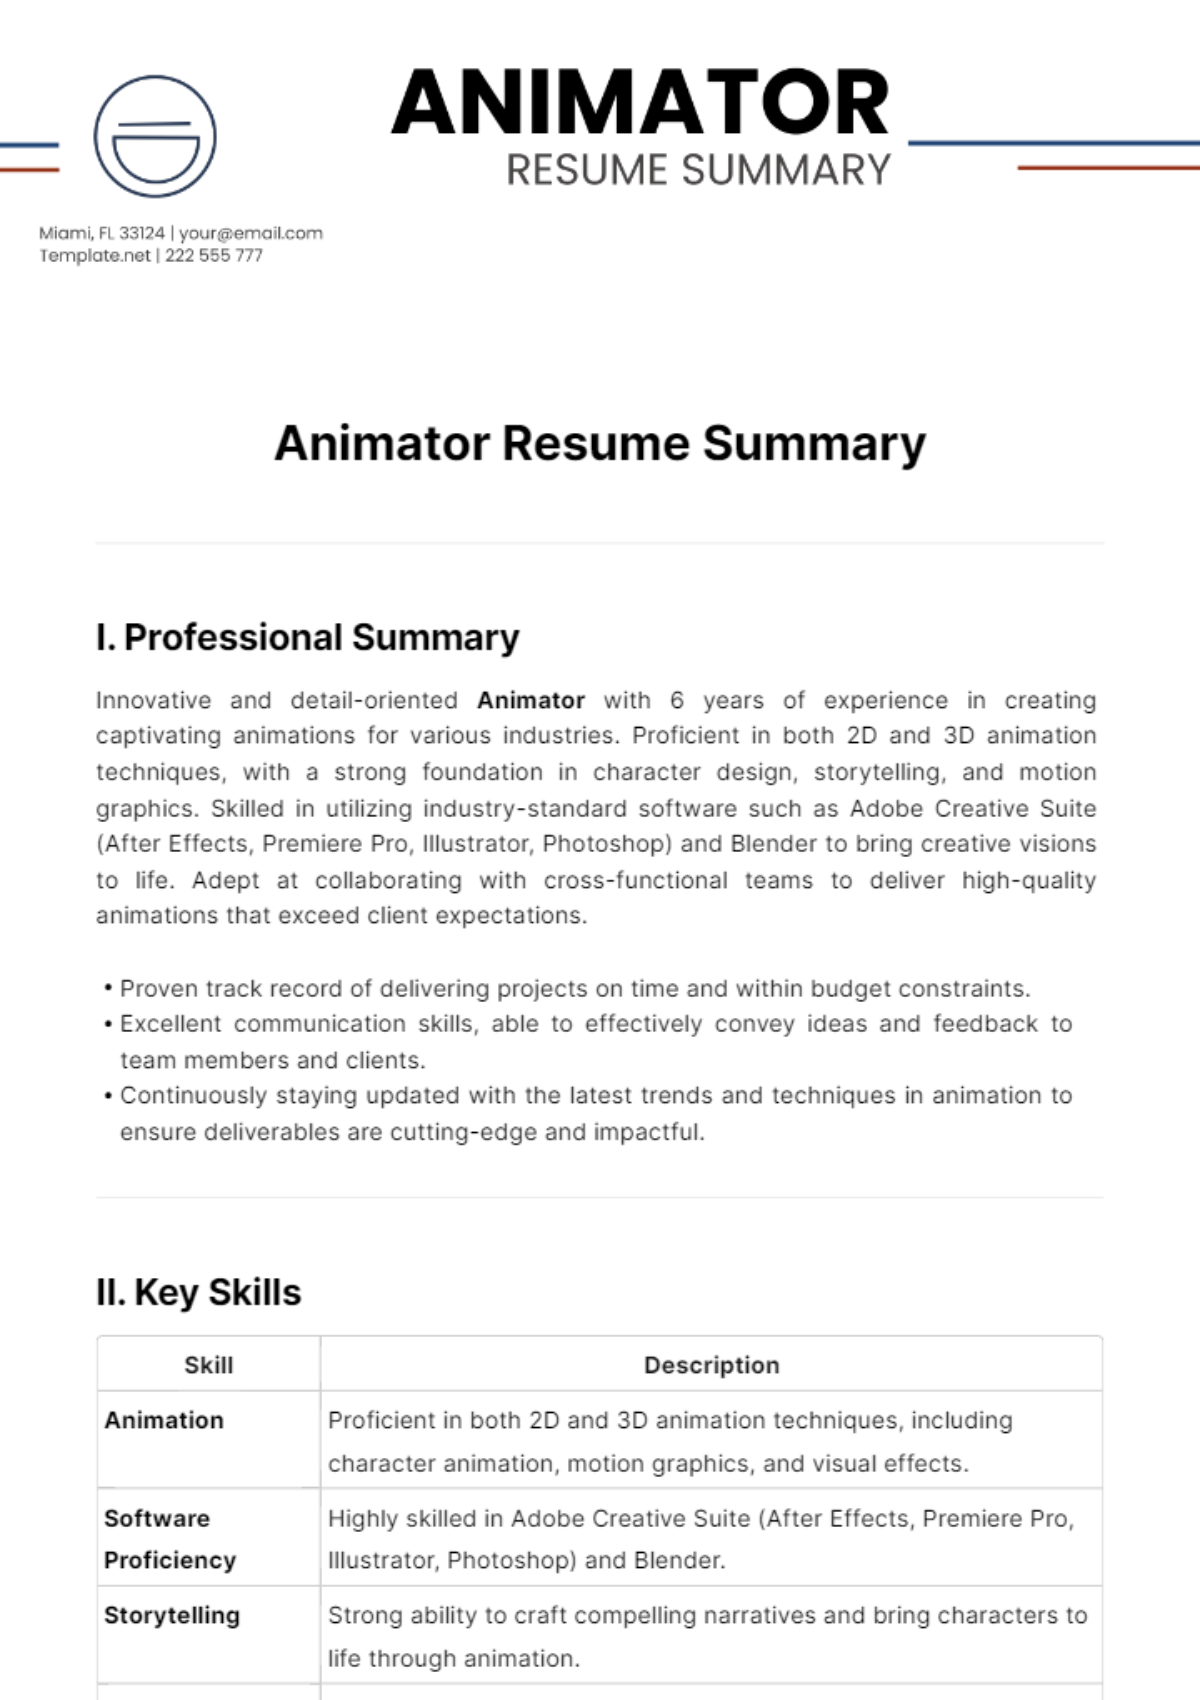 Animator Resume Summary Template